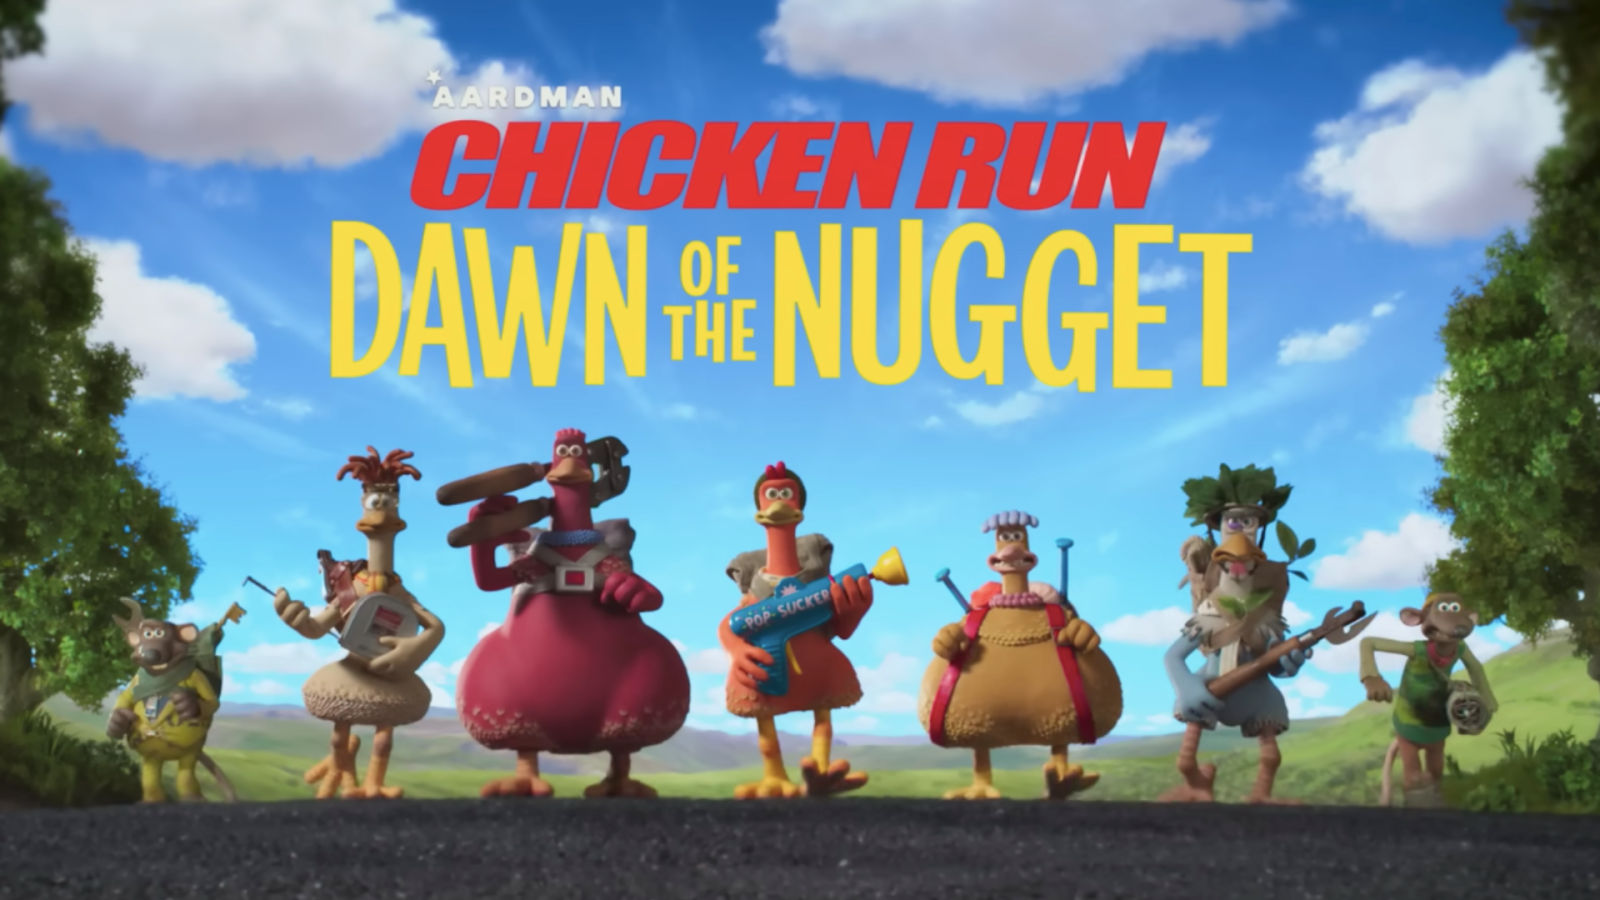 Chicken Run (2000) - IMDb